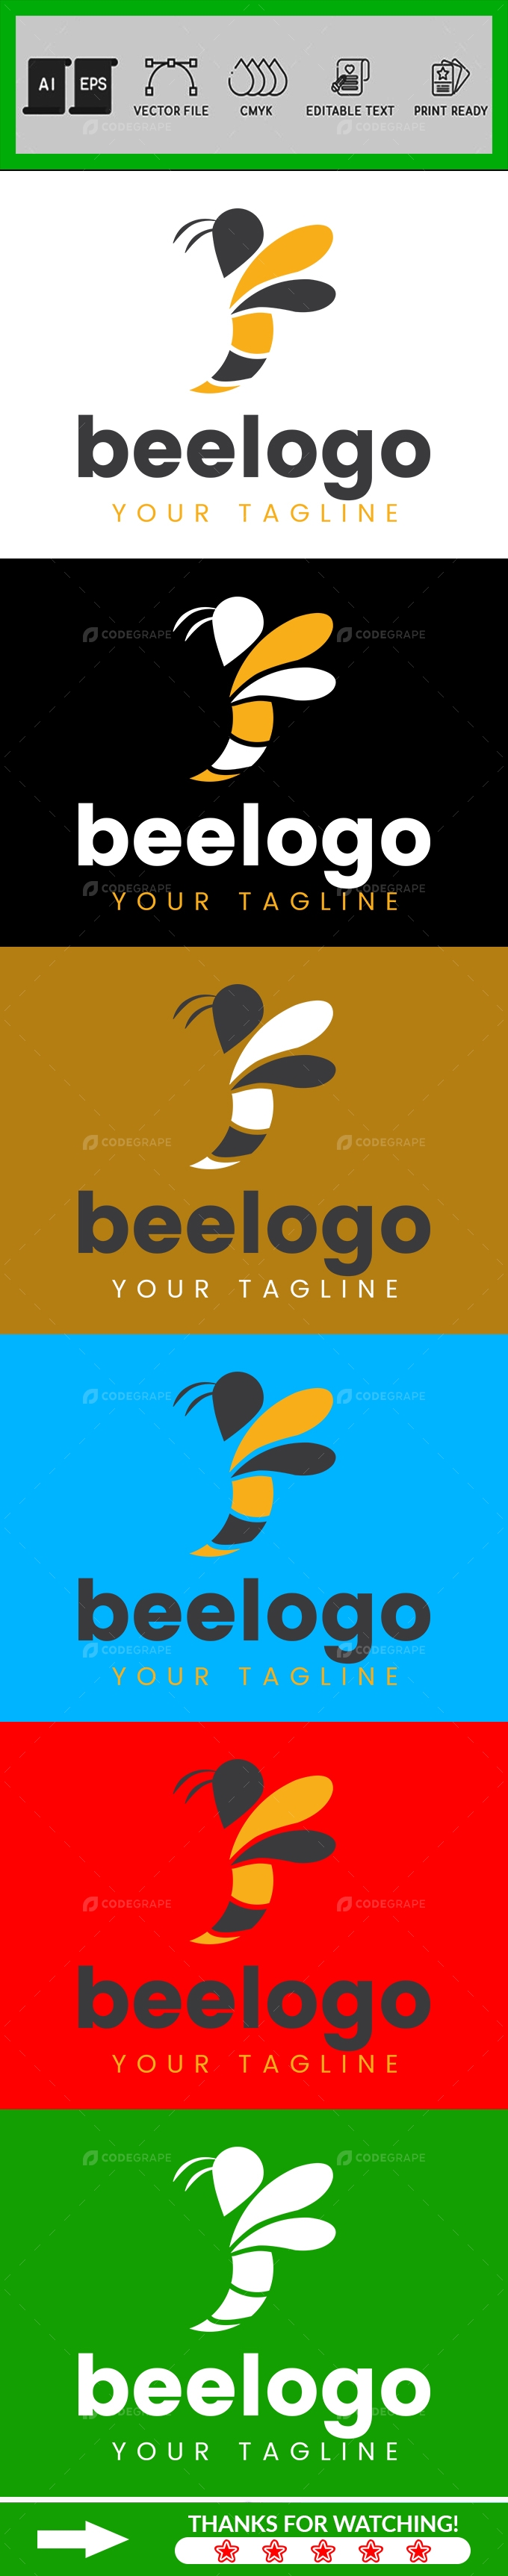 Bee Logo Design Template